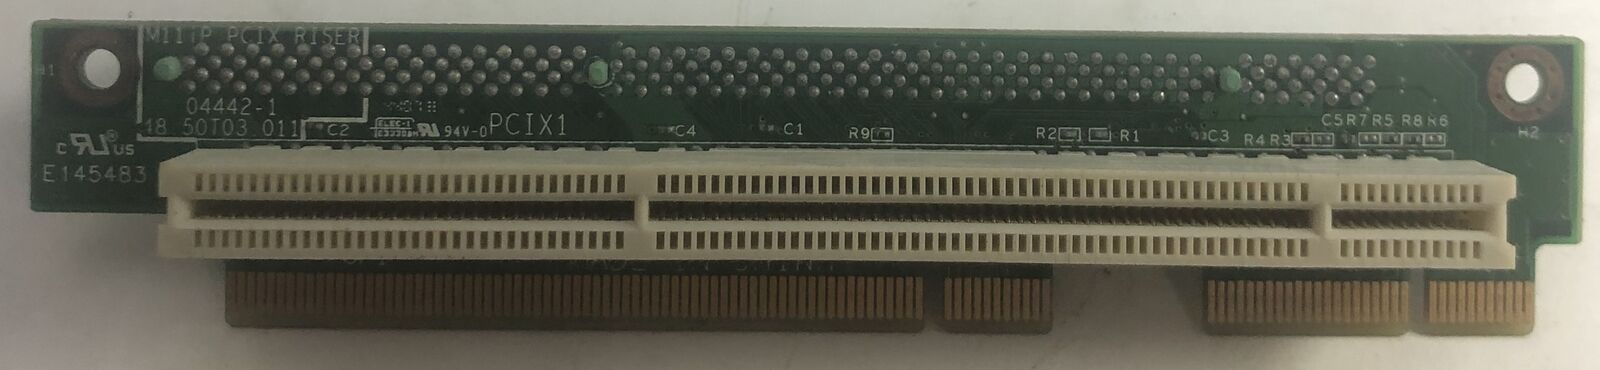 IBM xSeries 306m Server PCI-X Riser Card- 39M4338